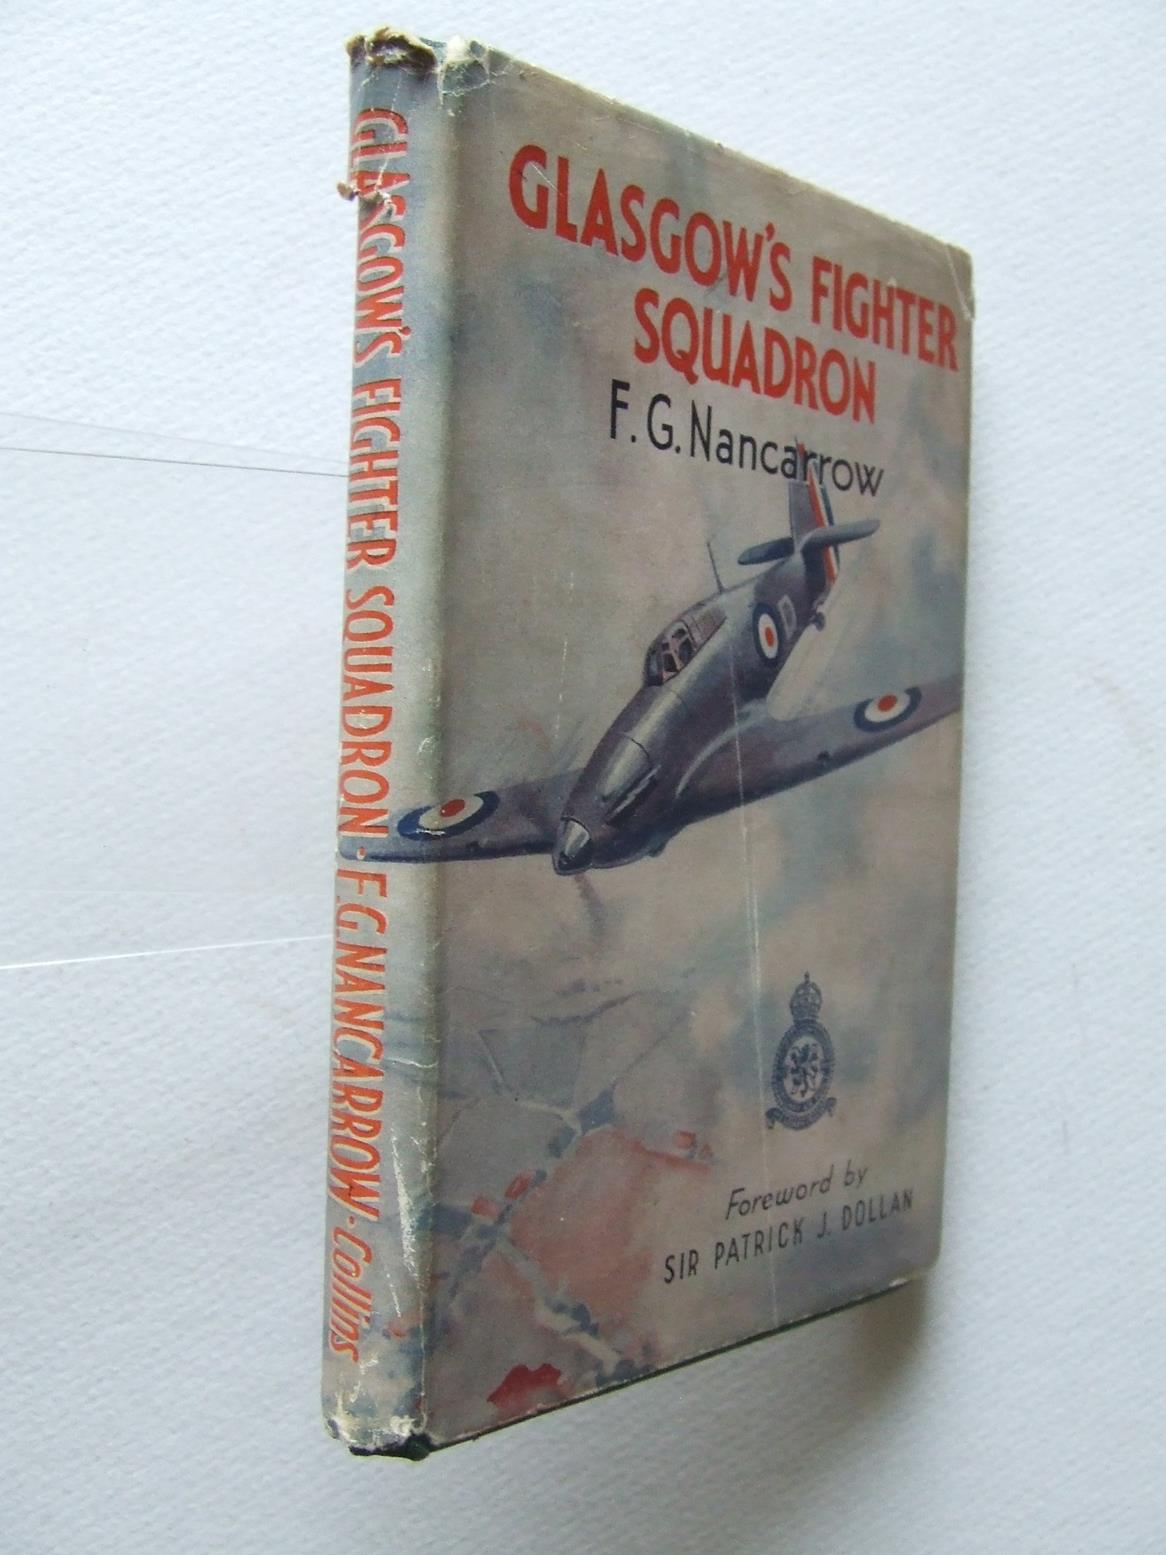 Glasgow's Fighter Squadron